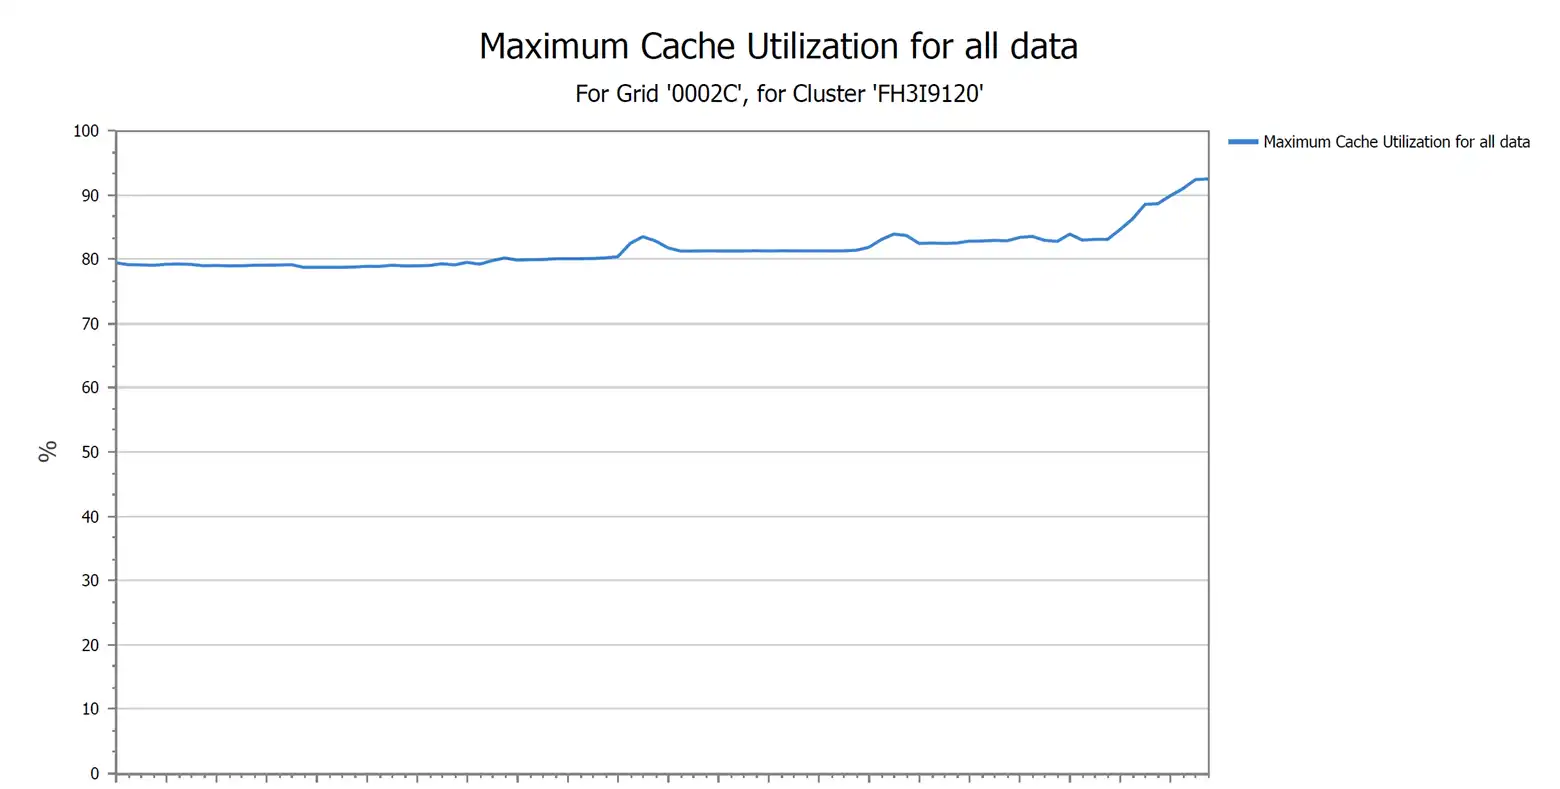 Maximum Cache Utilization for all data